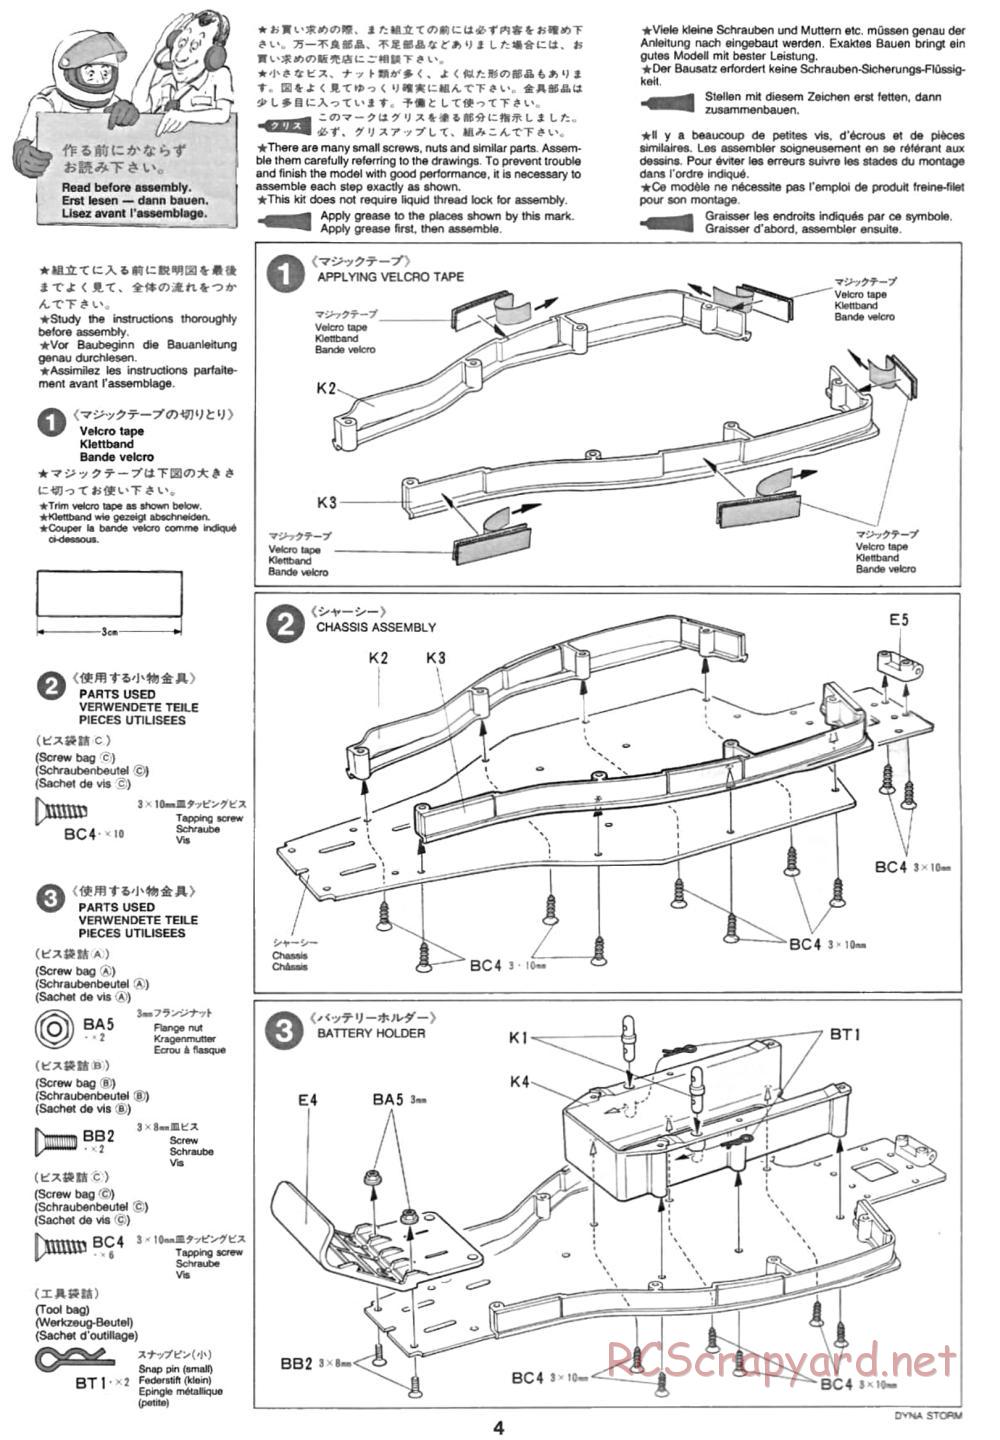 Tamiya - Dyna Storm Chassis - Manual - Page 4